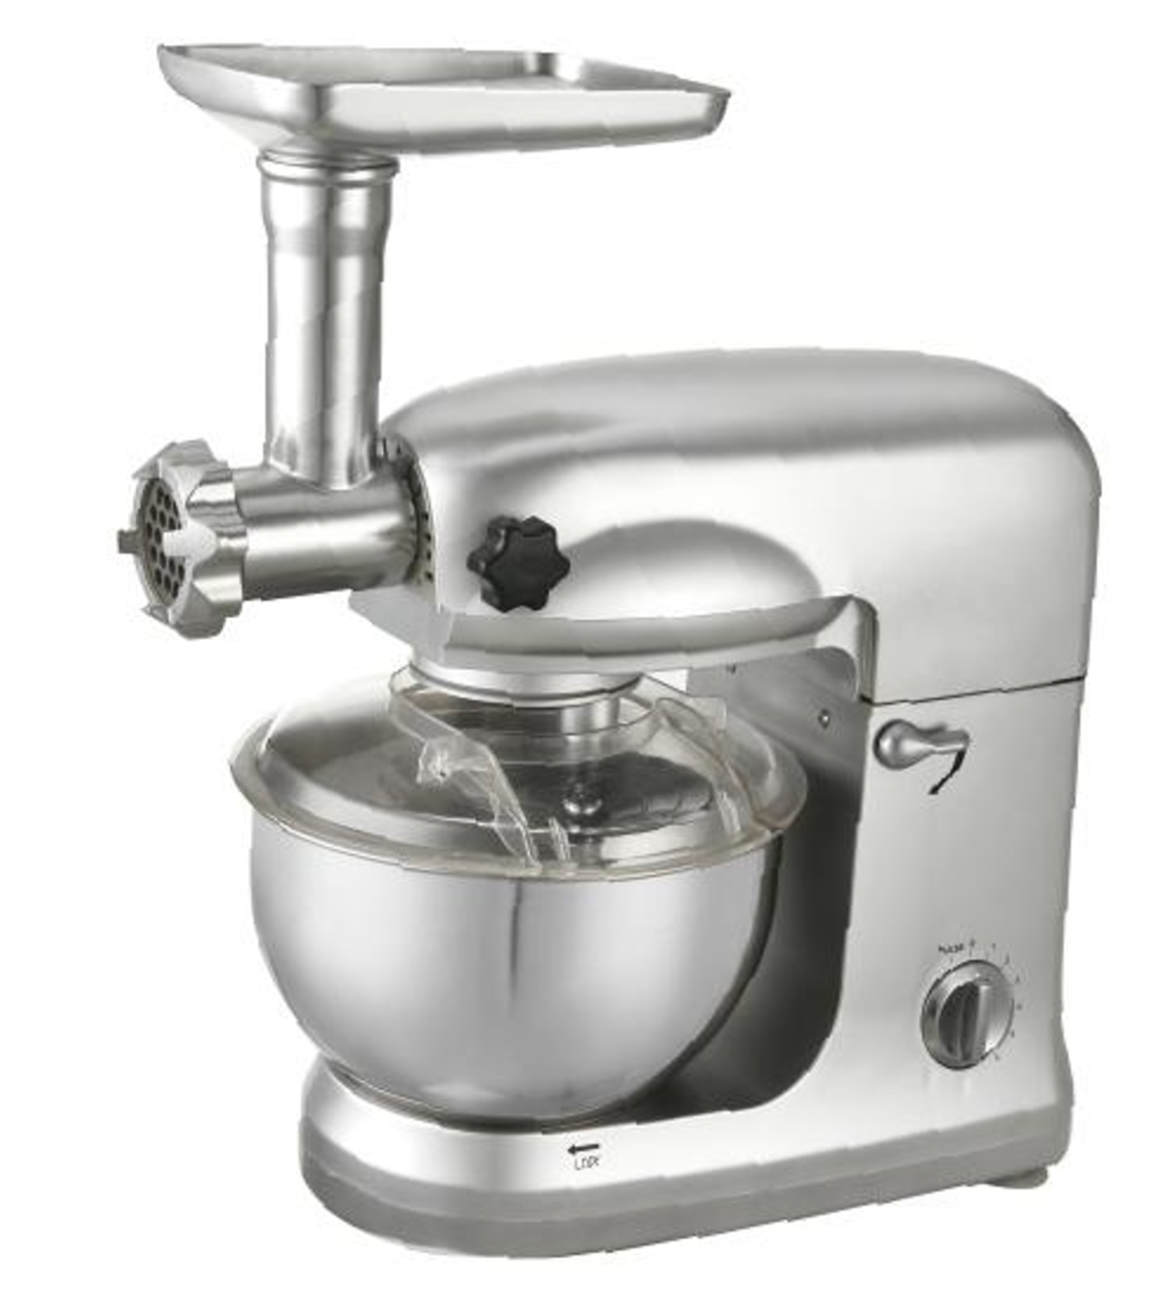 GRT-9702A Hot Sale Kitchen Robot Multifunctional Stand Mixer Kitchenaid Food Mixer